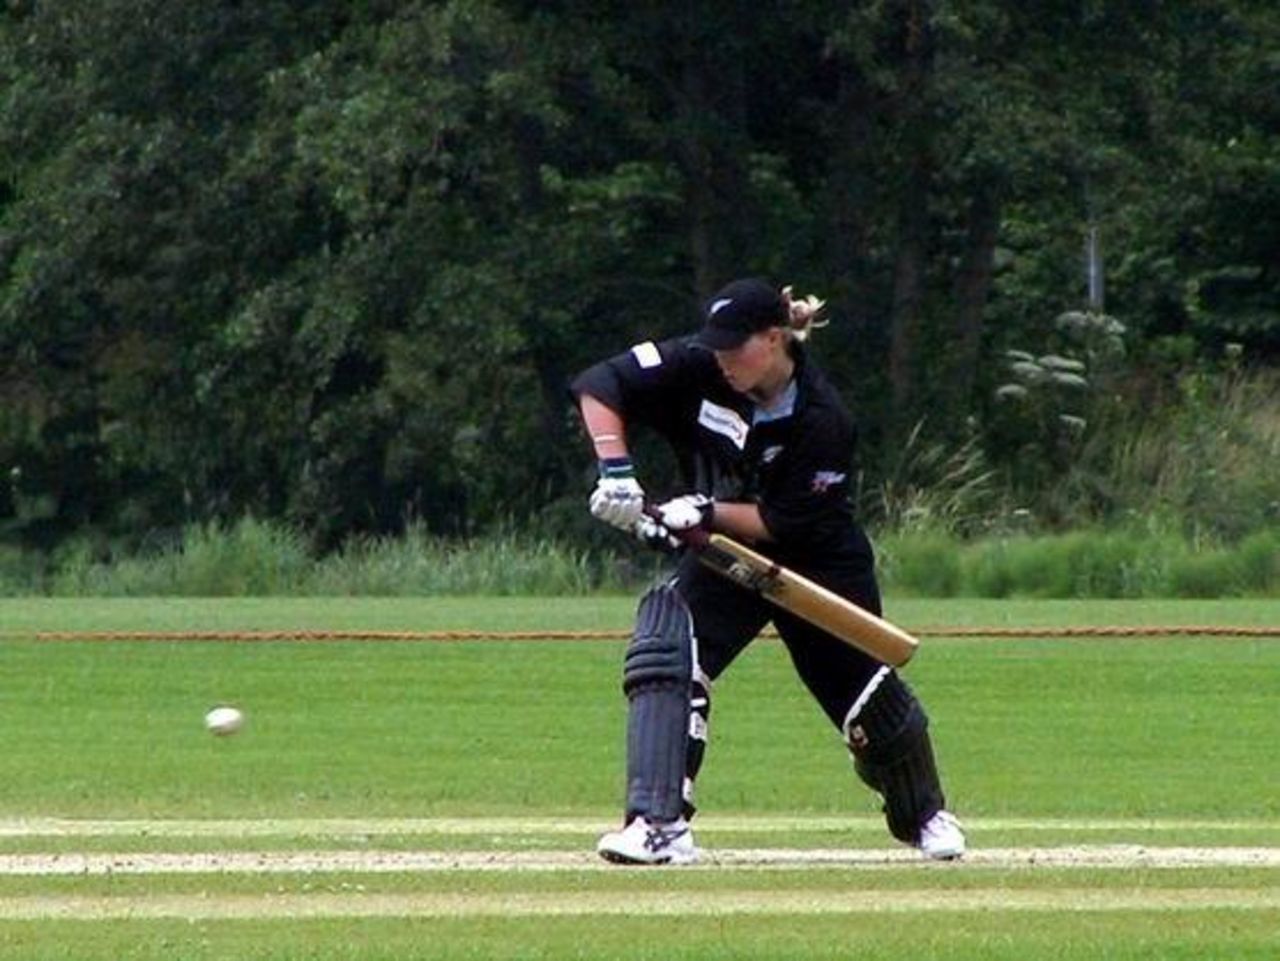 Aimee Mason batting for New Zealand against Netherlands, 25 June 2002